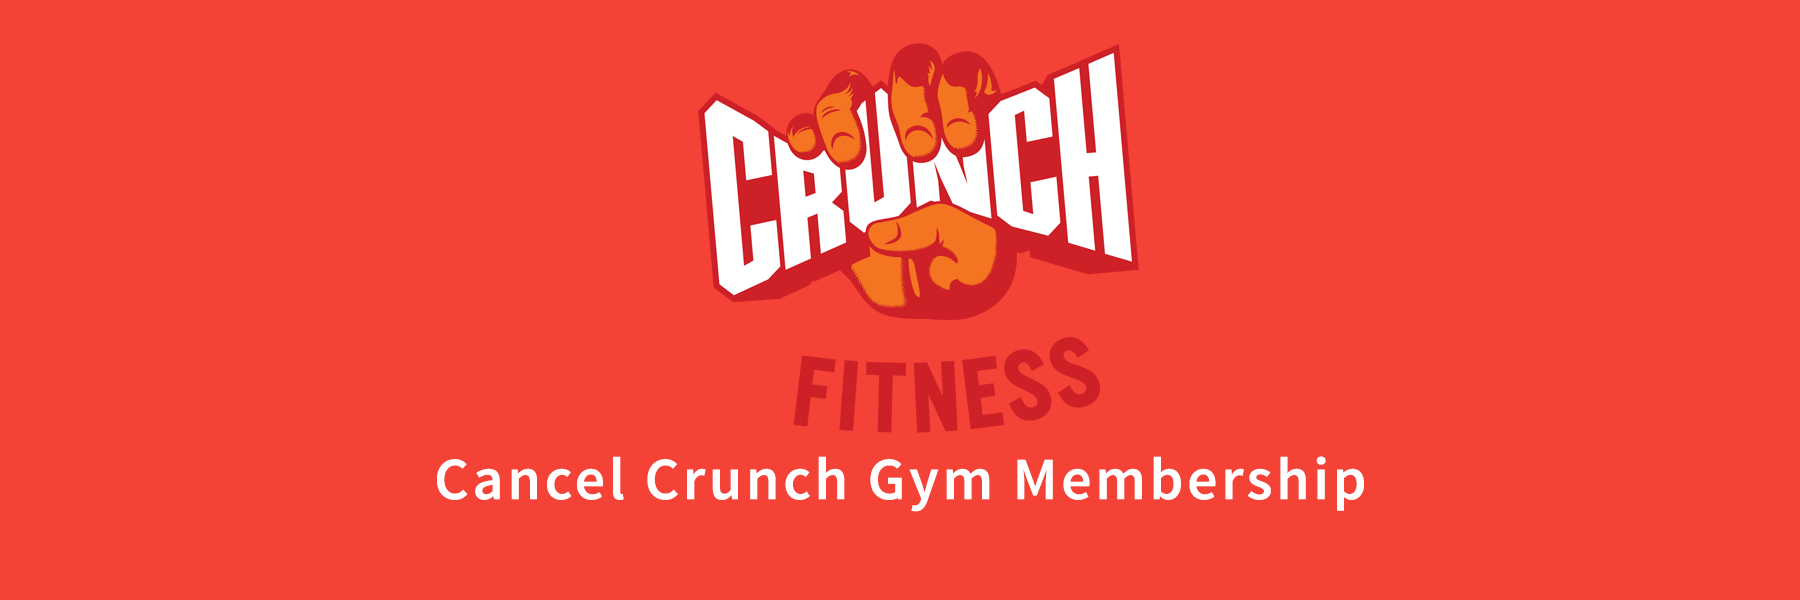 Cancelling Crunch Gym Membership